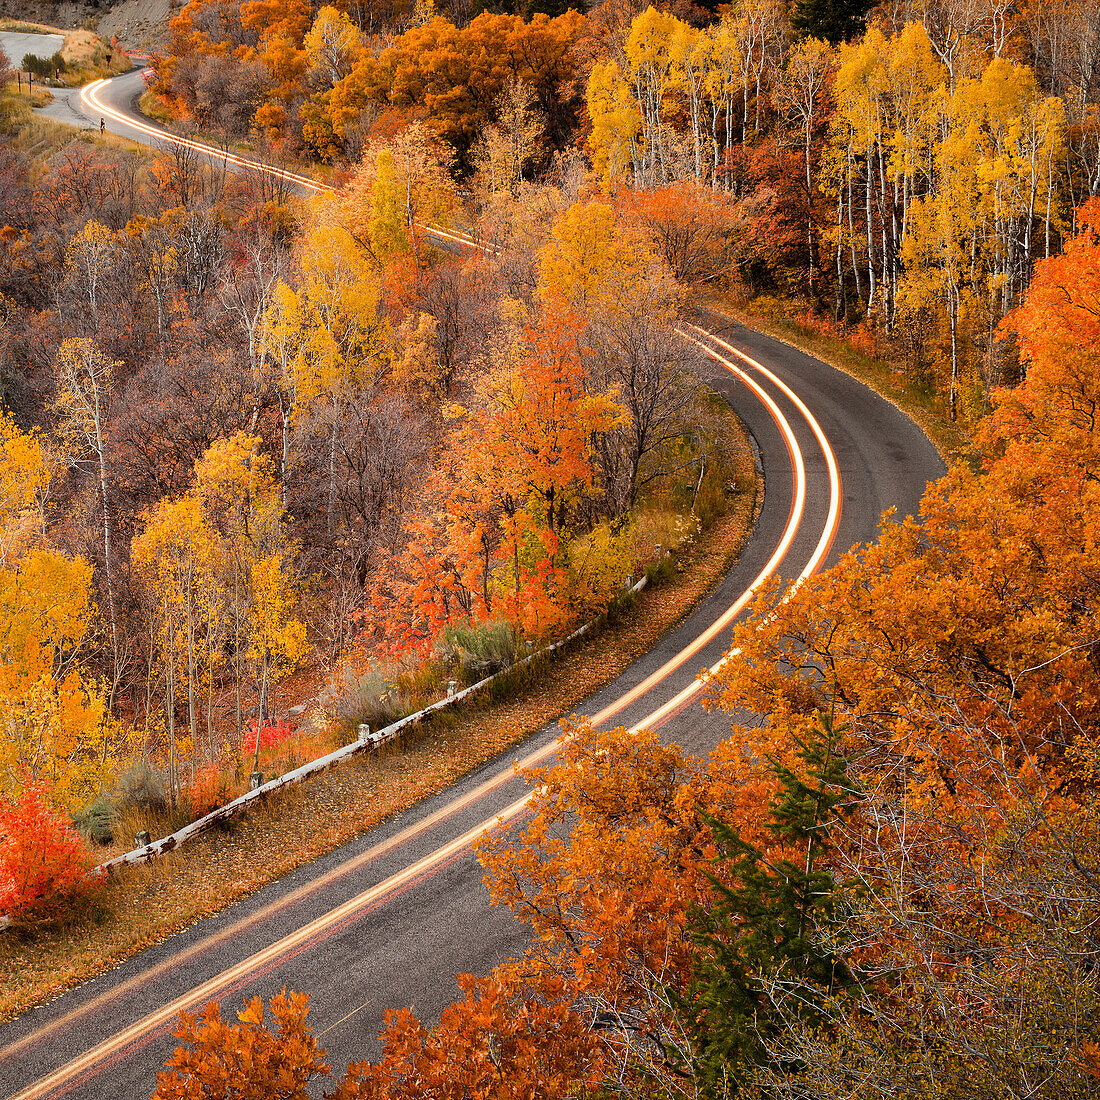 Long exposure of car driving on road through autumn leaves, Alpine, Utah, USA